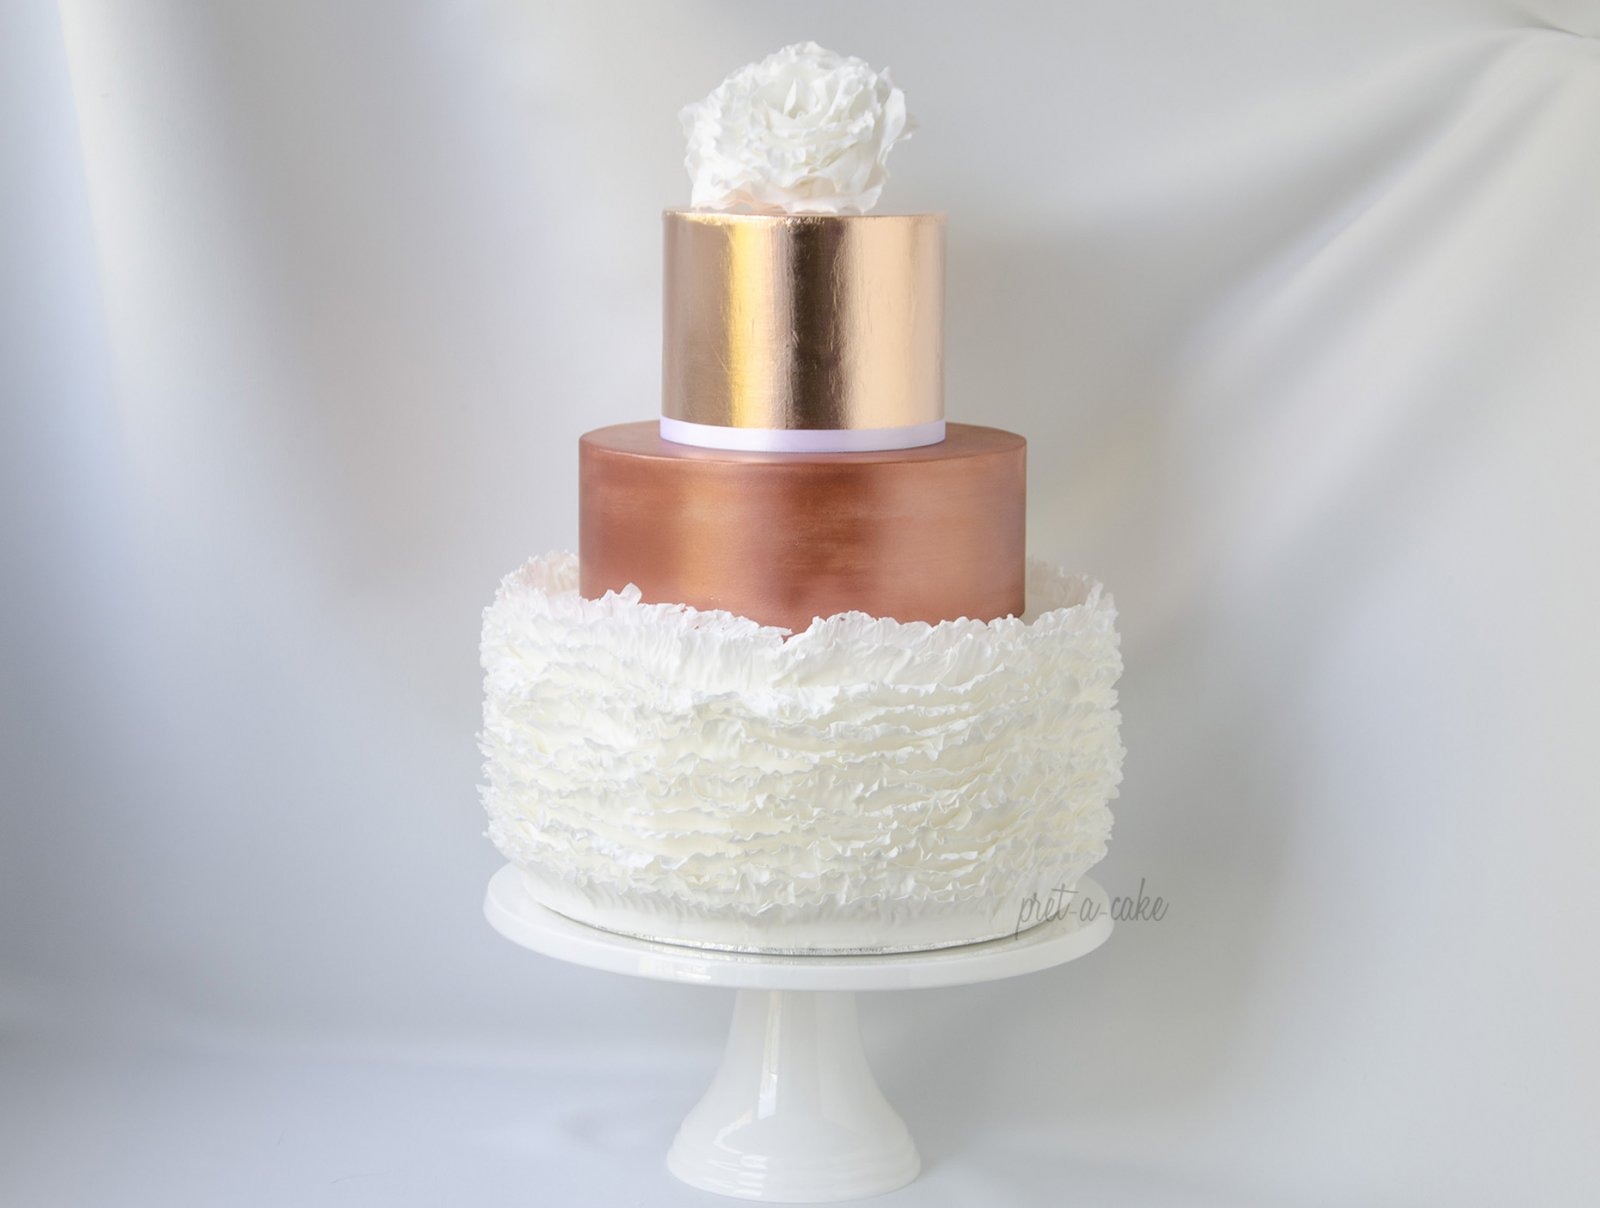 pret a cake, metallic wedding cake